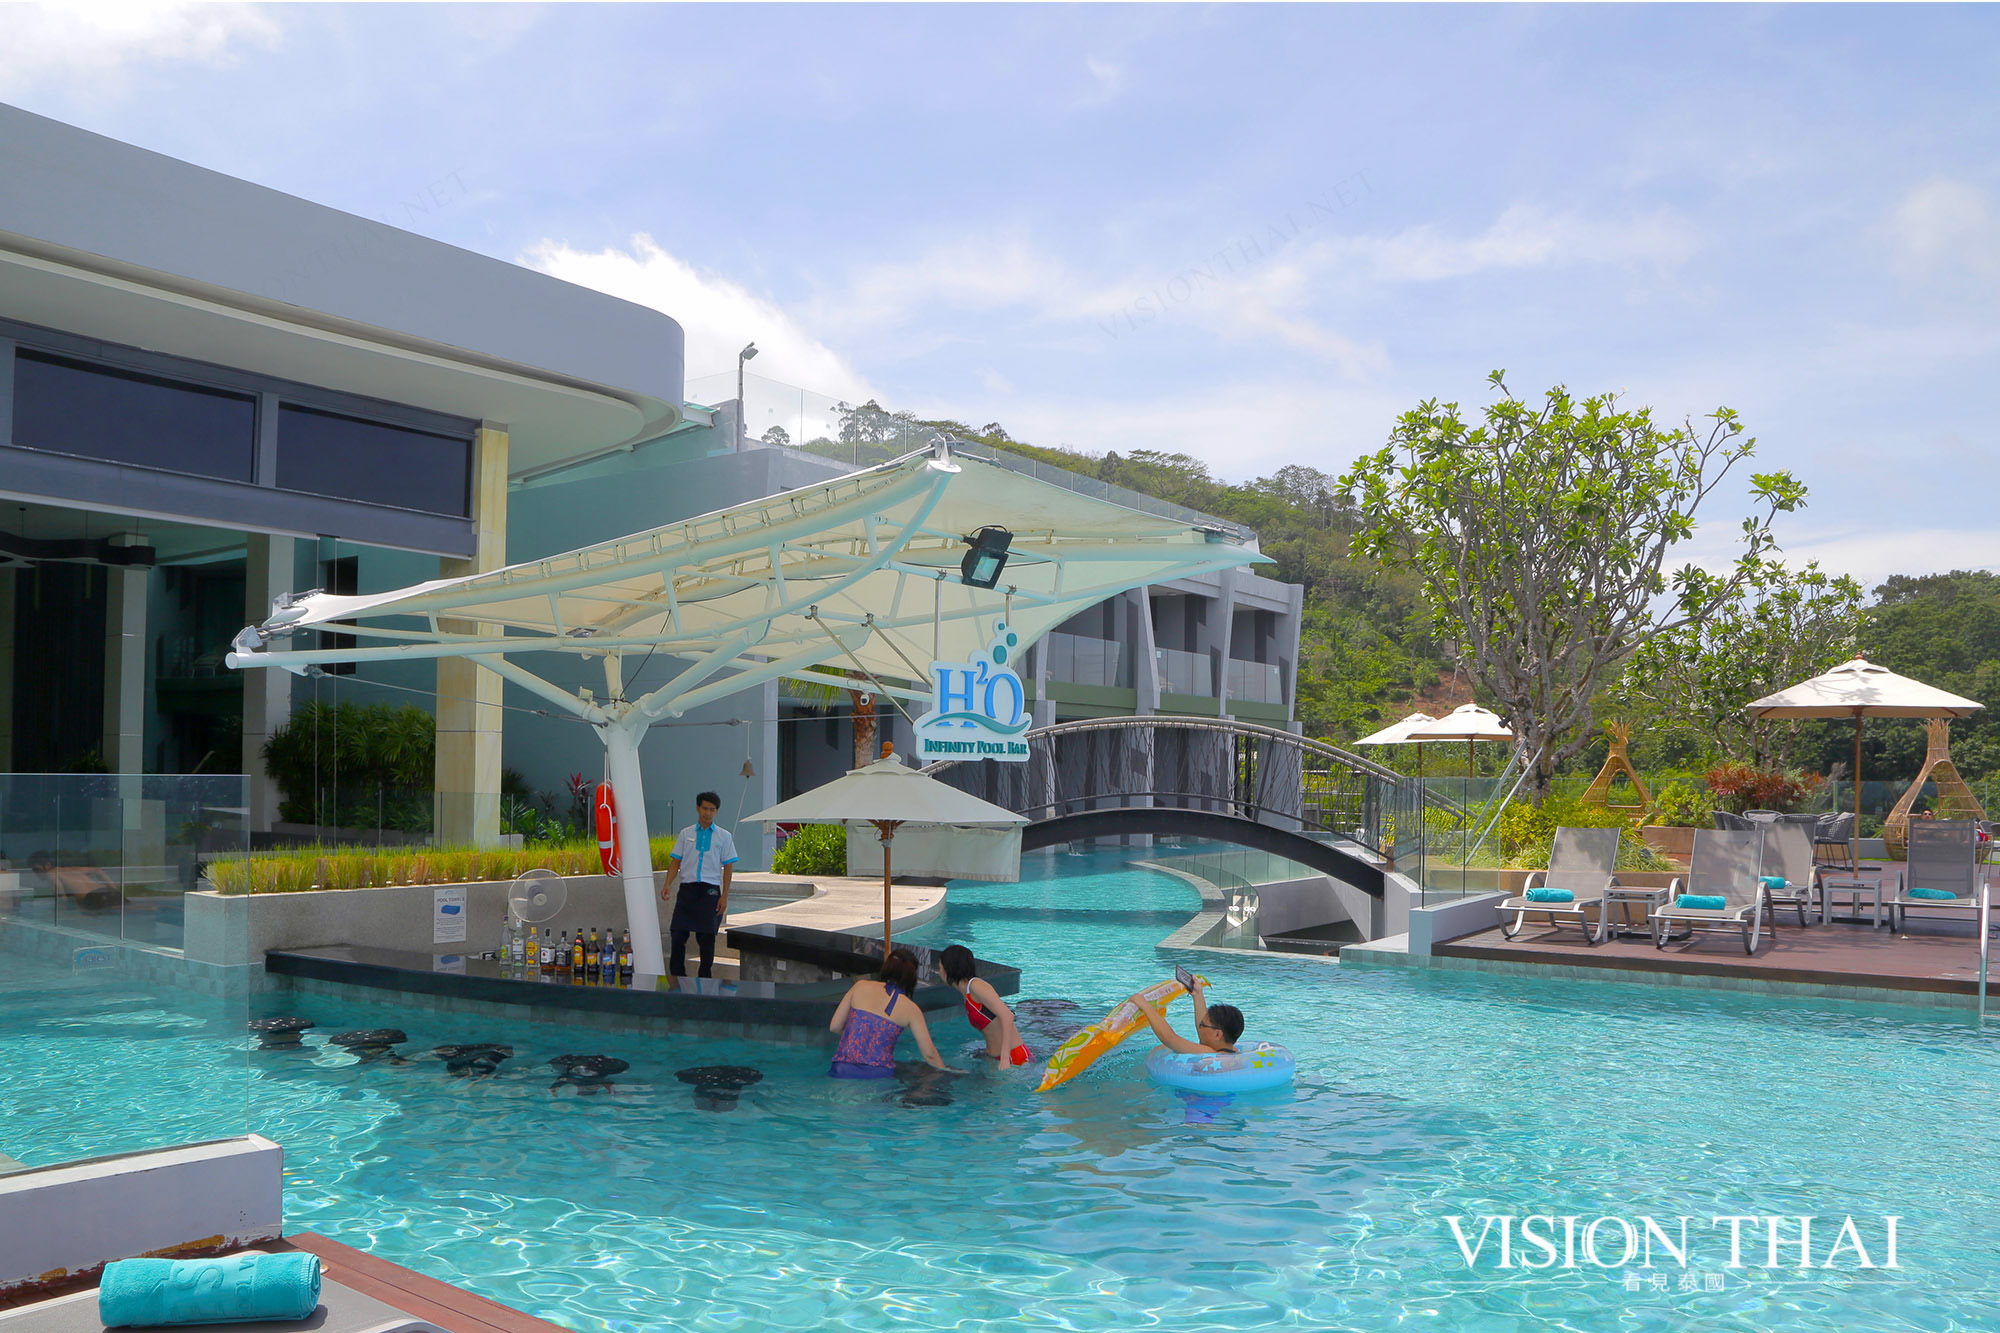 克雷斯特泳池别墅及度假村 Crest Resort and Pool Villas 芭东区 度假村 普吉 度假村 Crest Resort